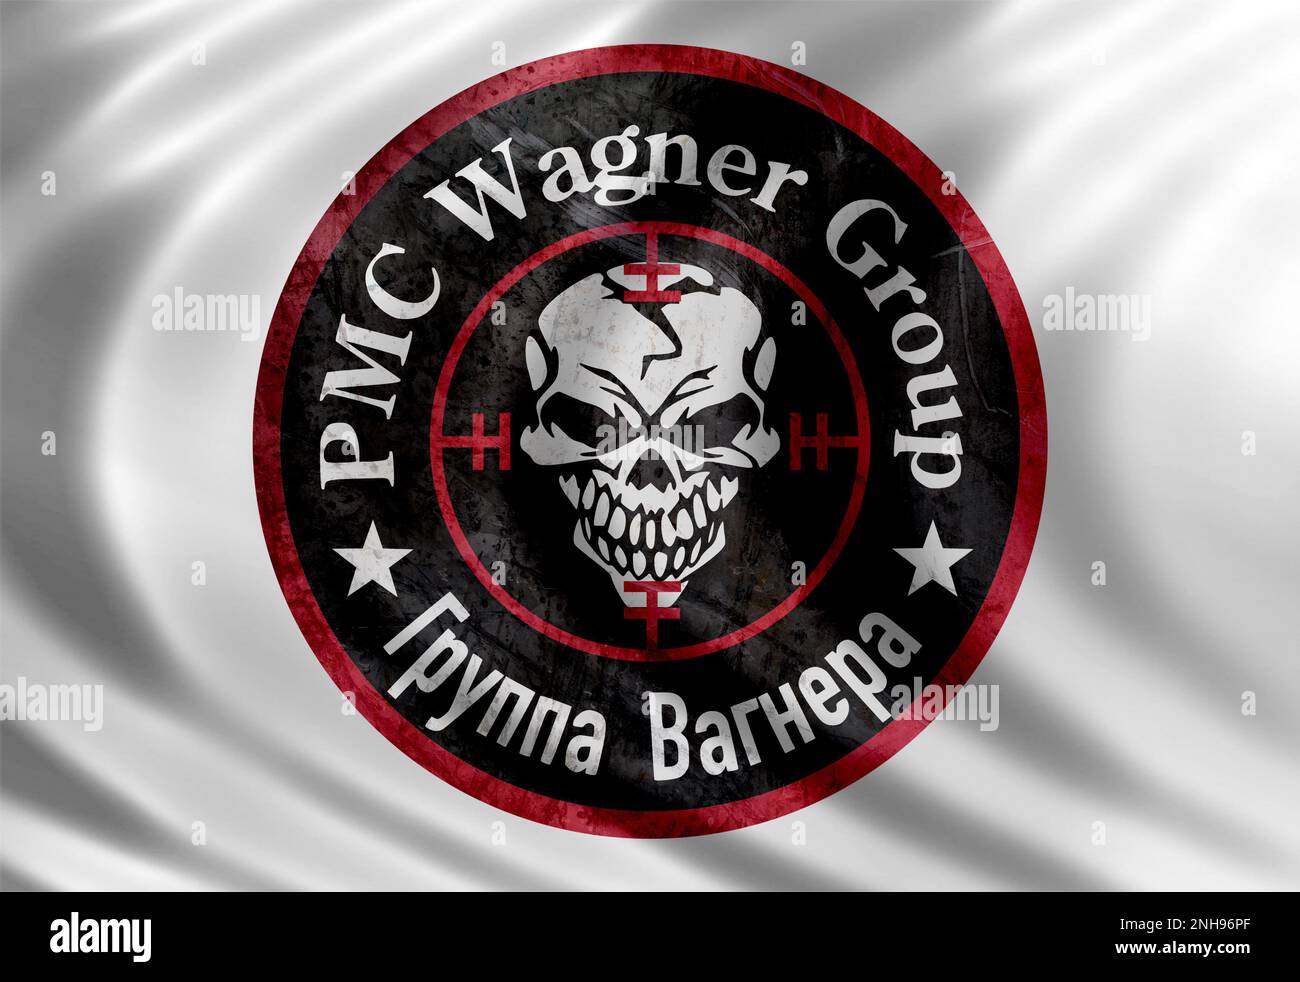 Wagner Group - Russian paramilitary organization logo symbol Stock Photo